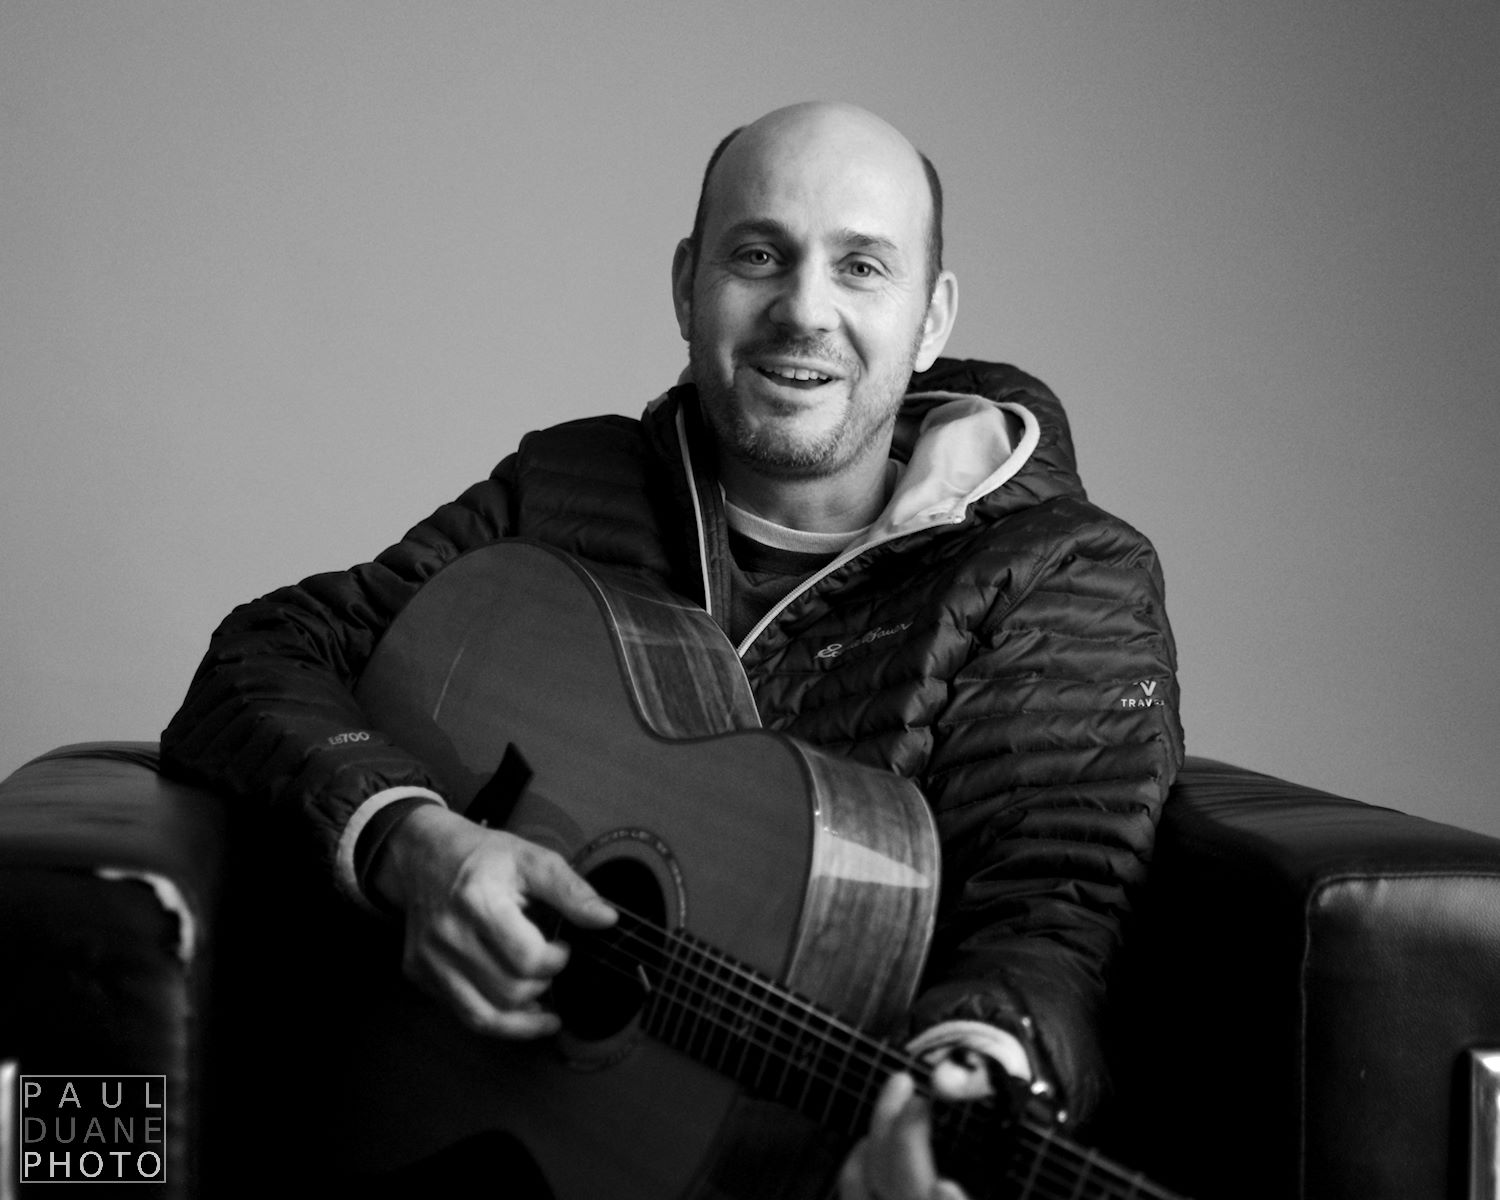 Singer / songwriter Peter Breinholt photographed by Paul Duane